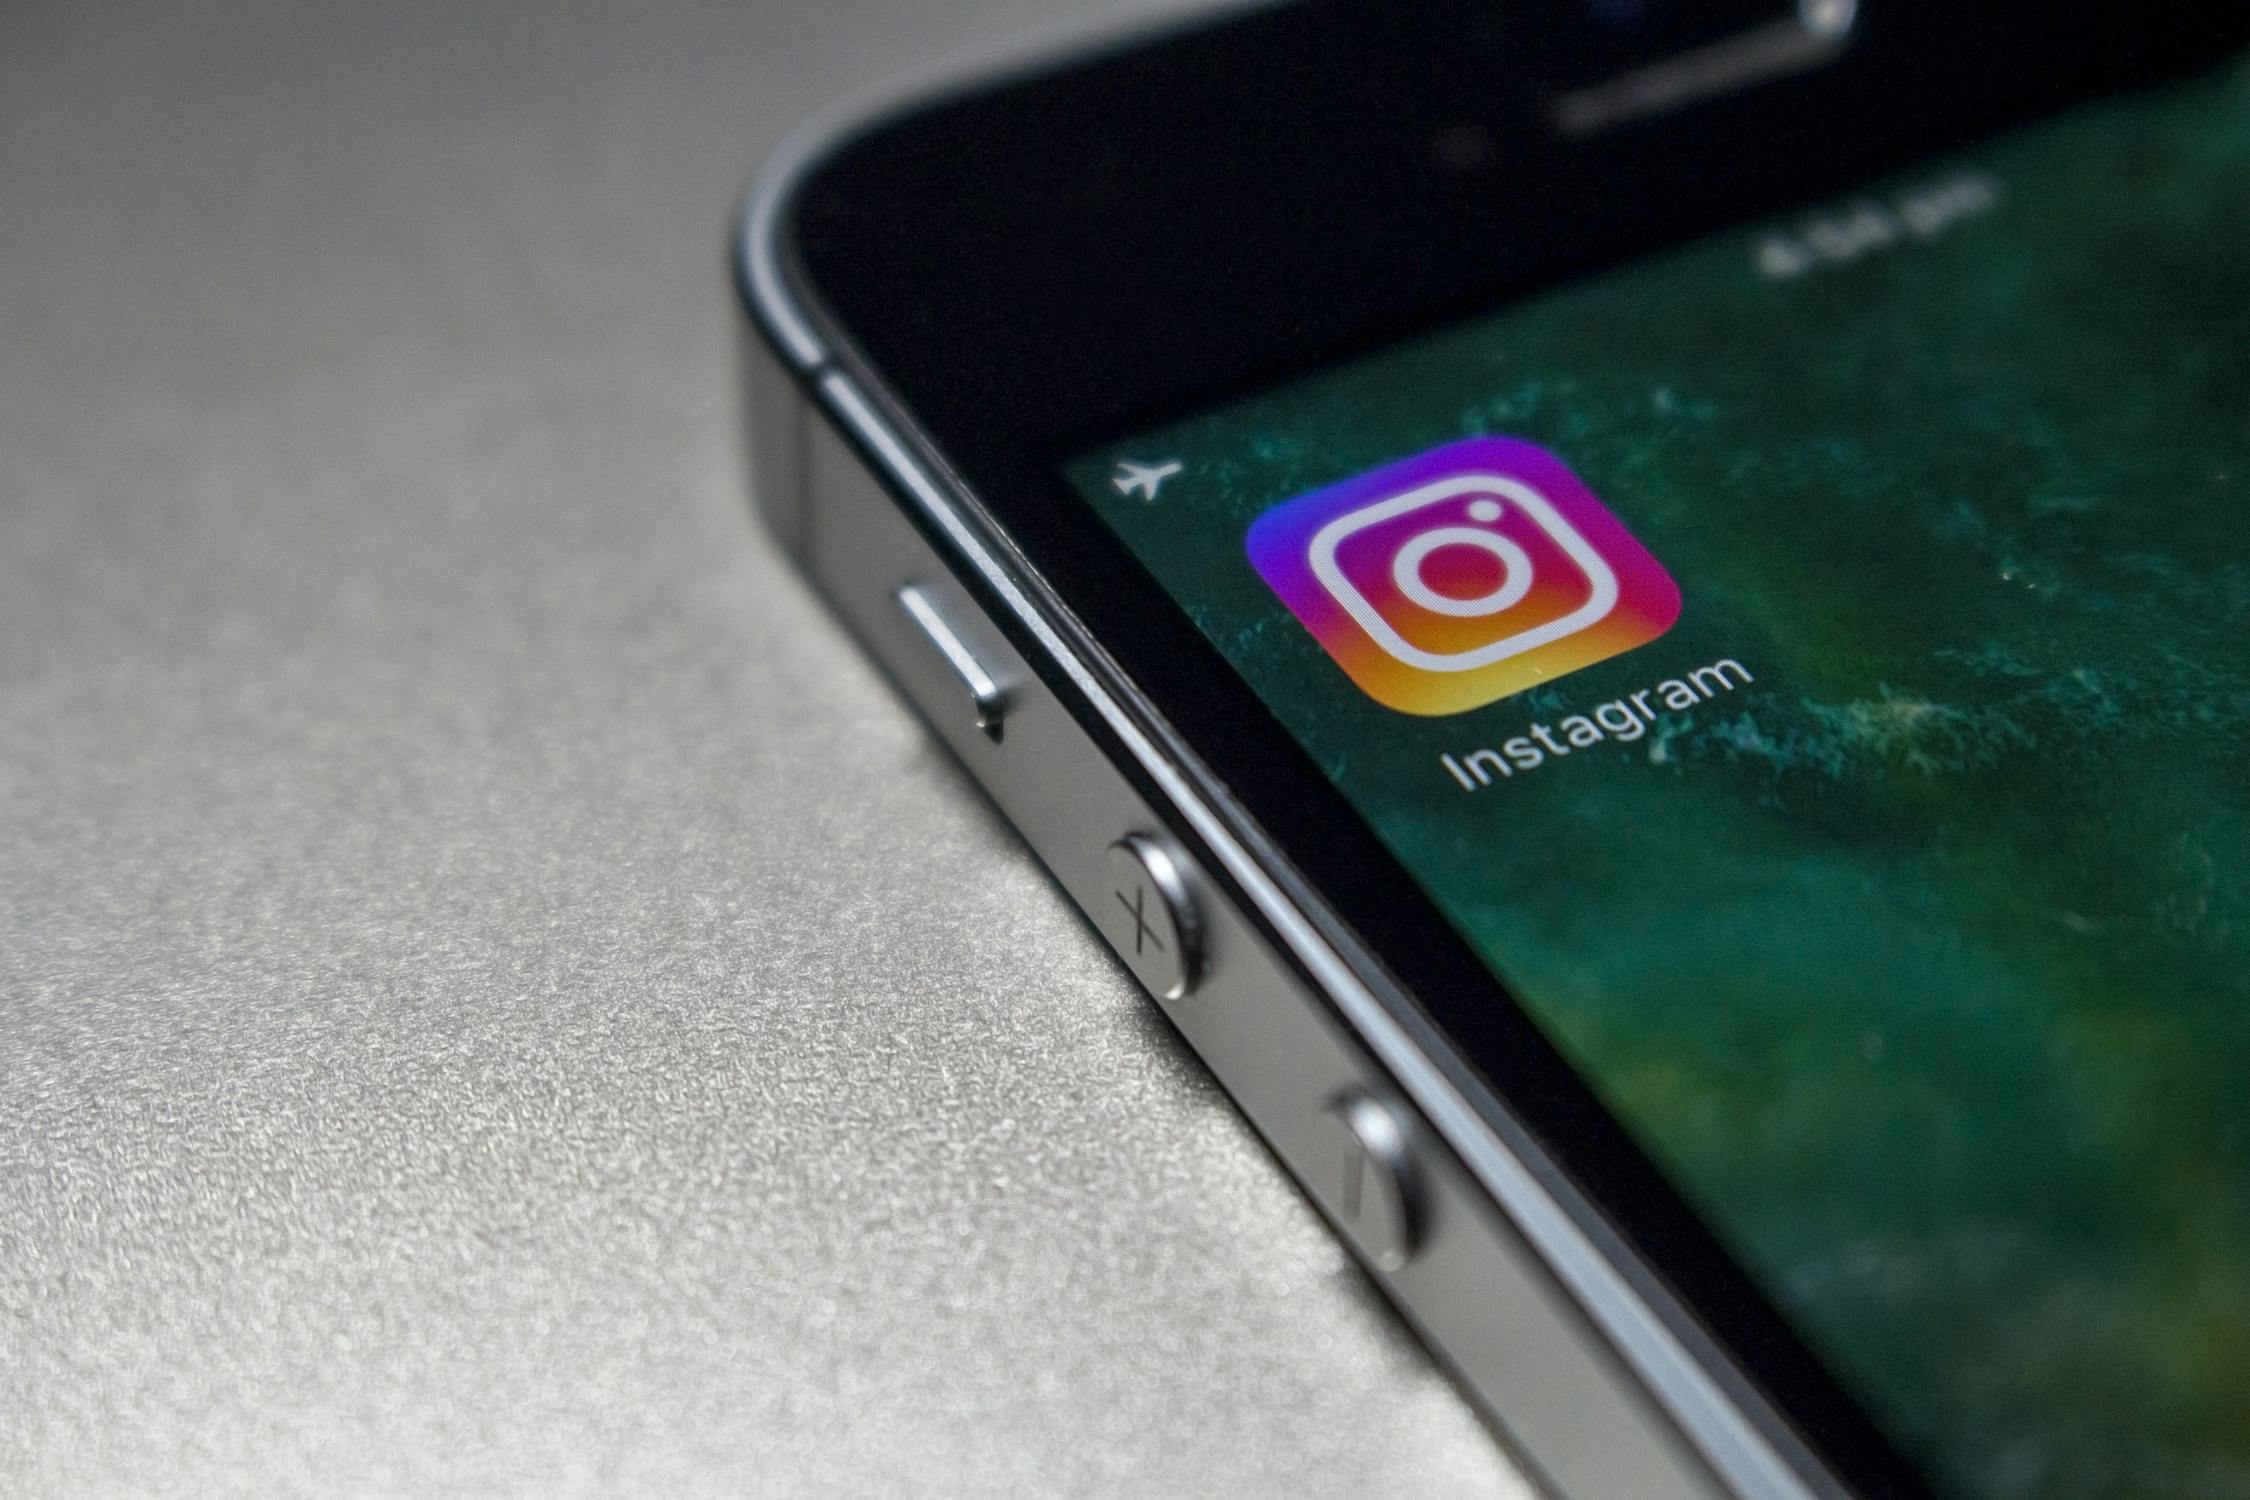 Close up image of smartphone showing Instagram logo